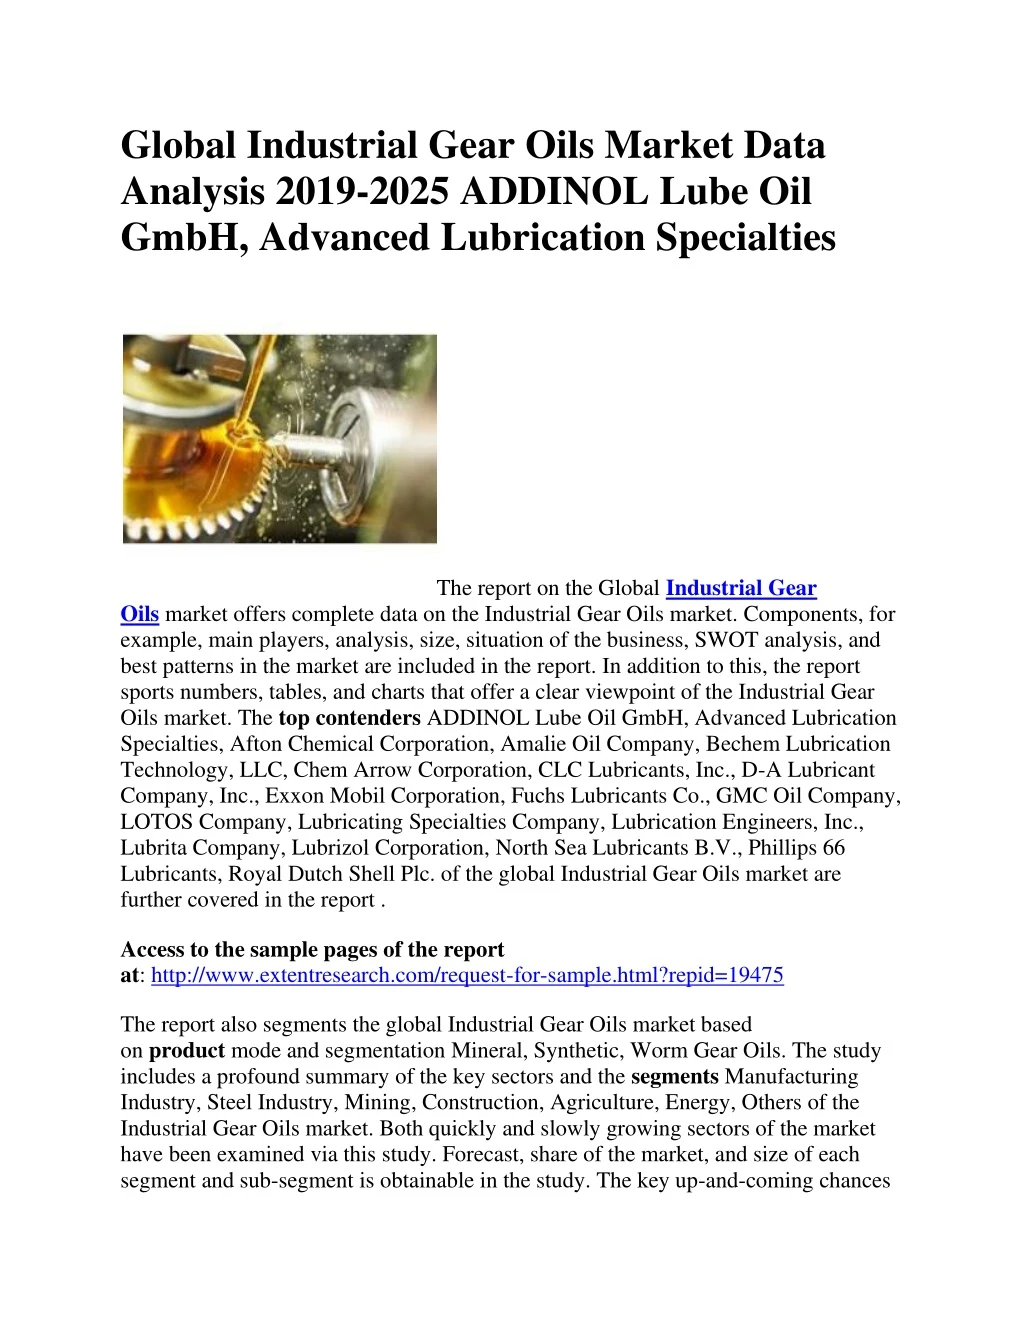 global industrial gear oils market data analysis